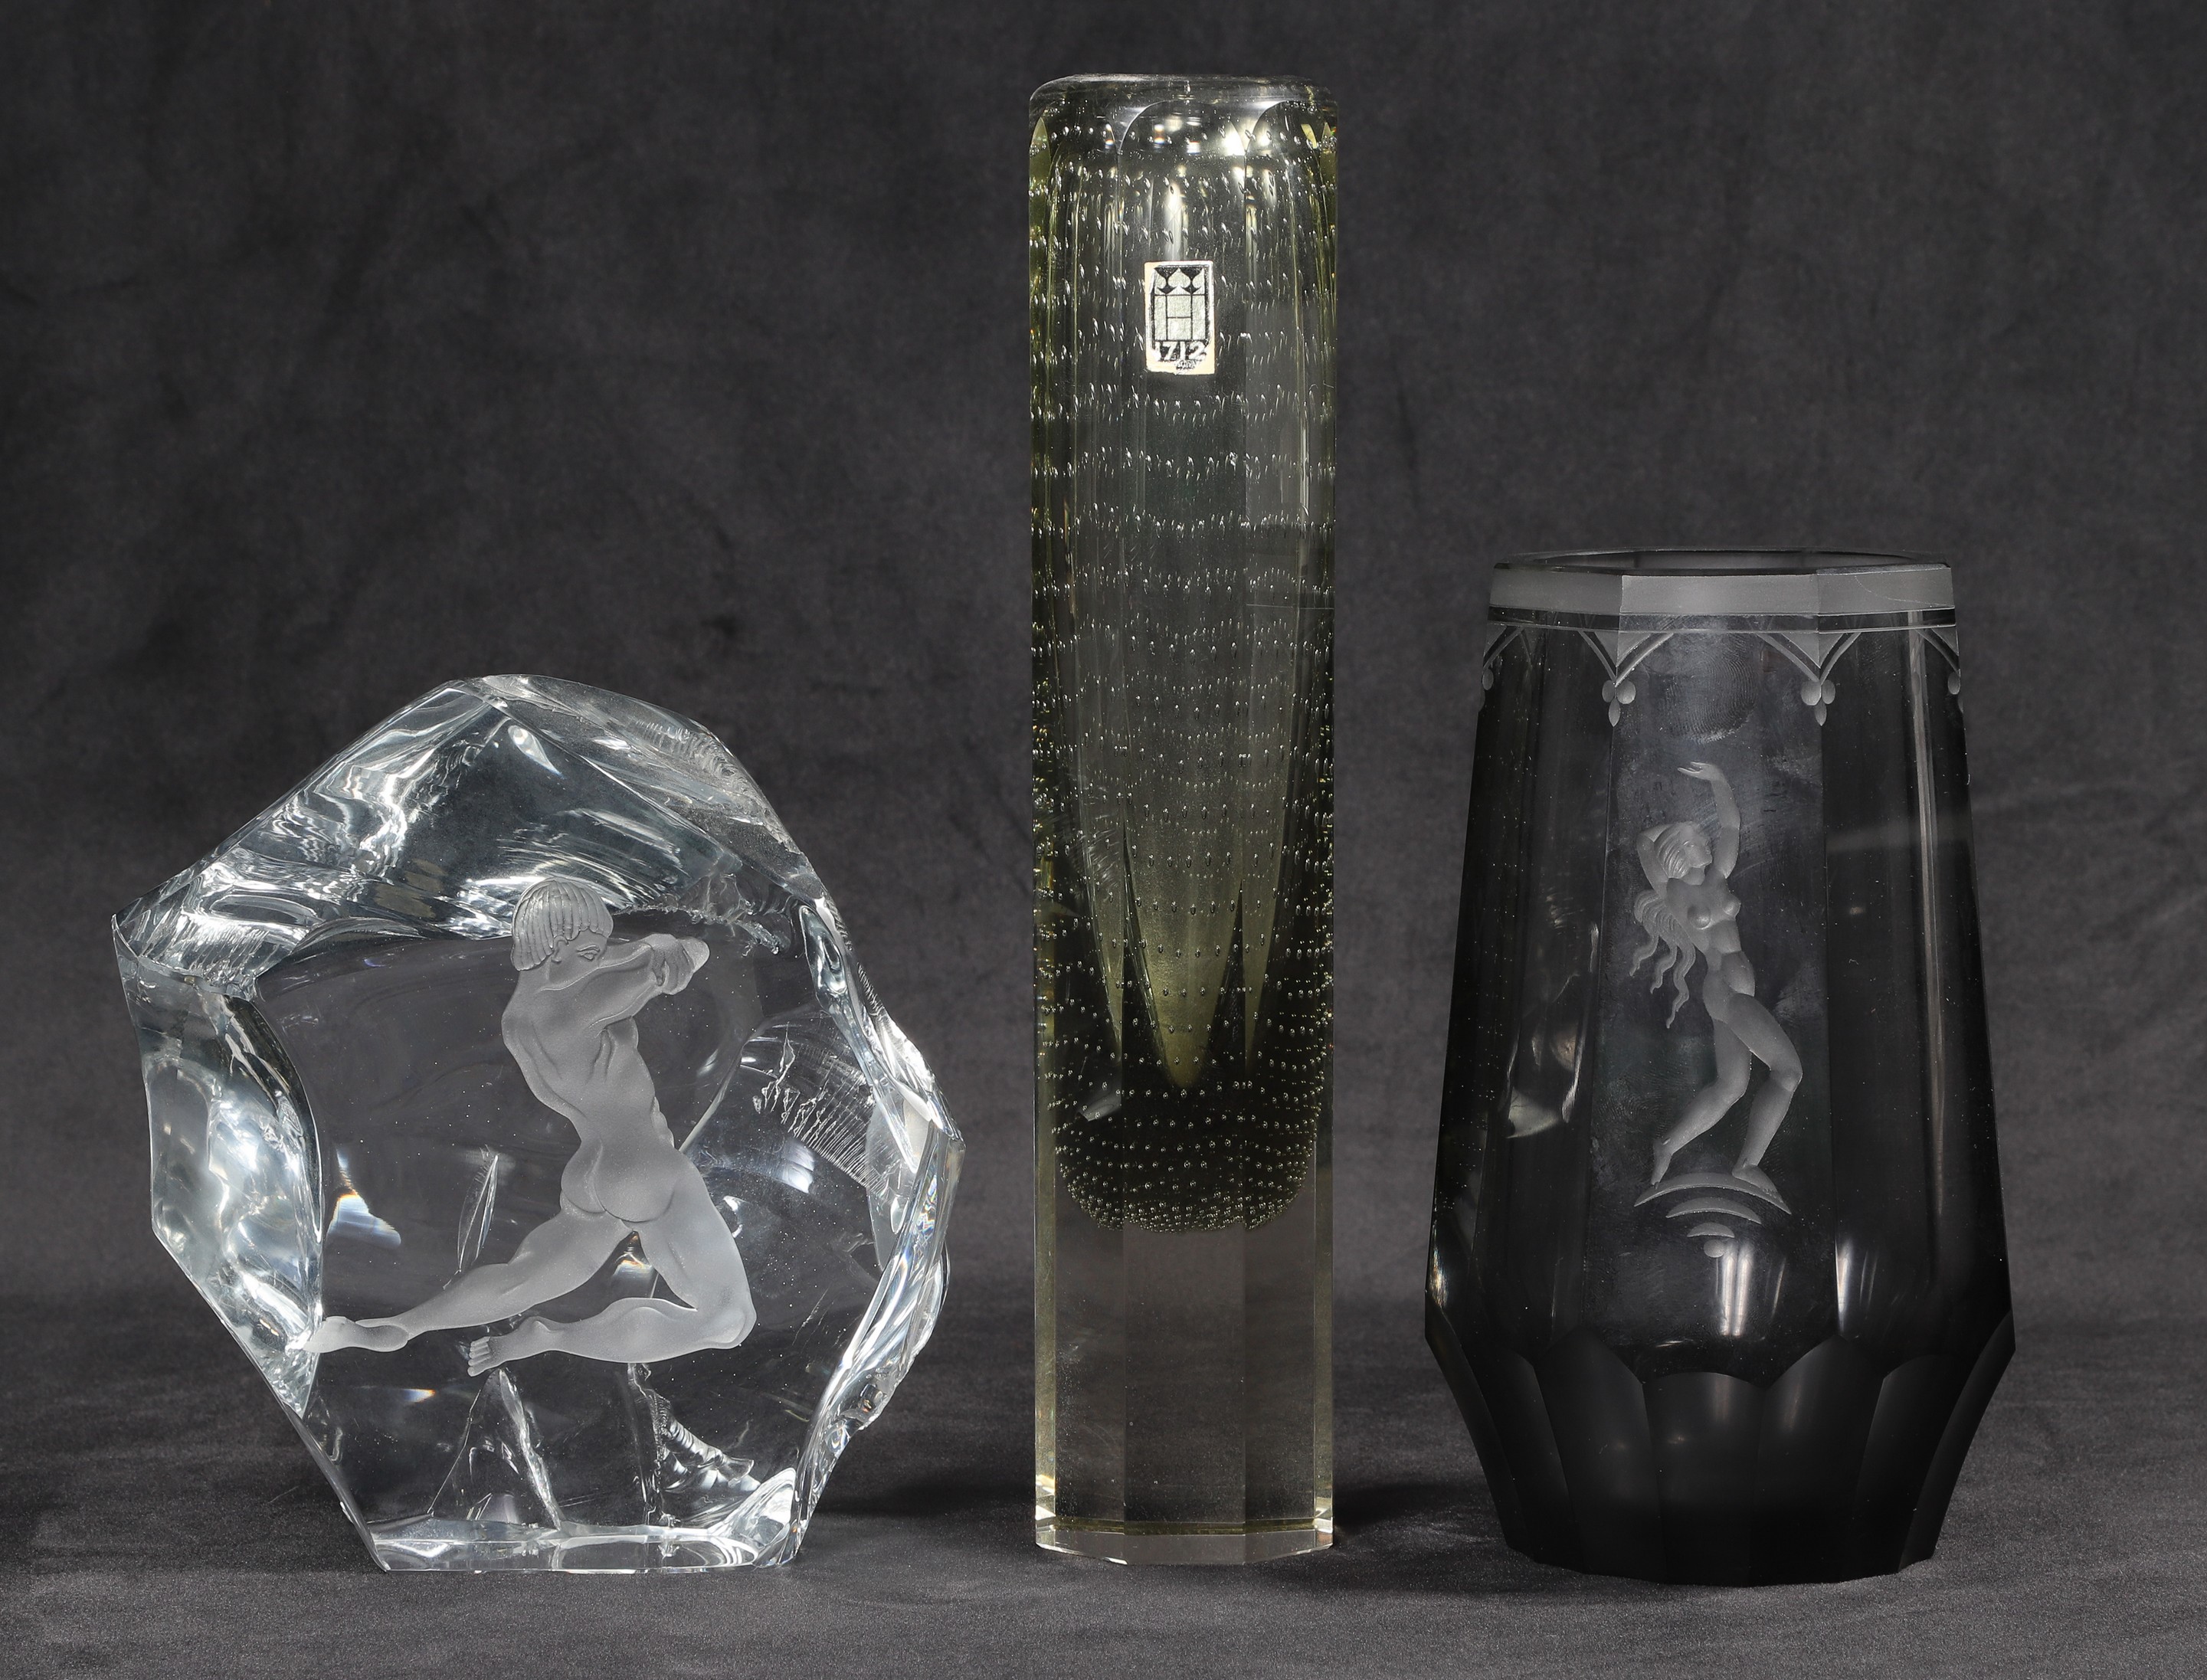 Elme vase and etched glass sculpture 2e07b1